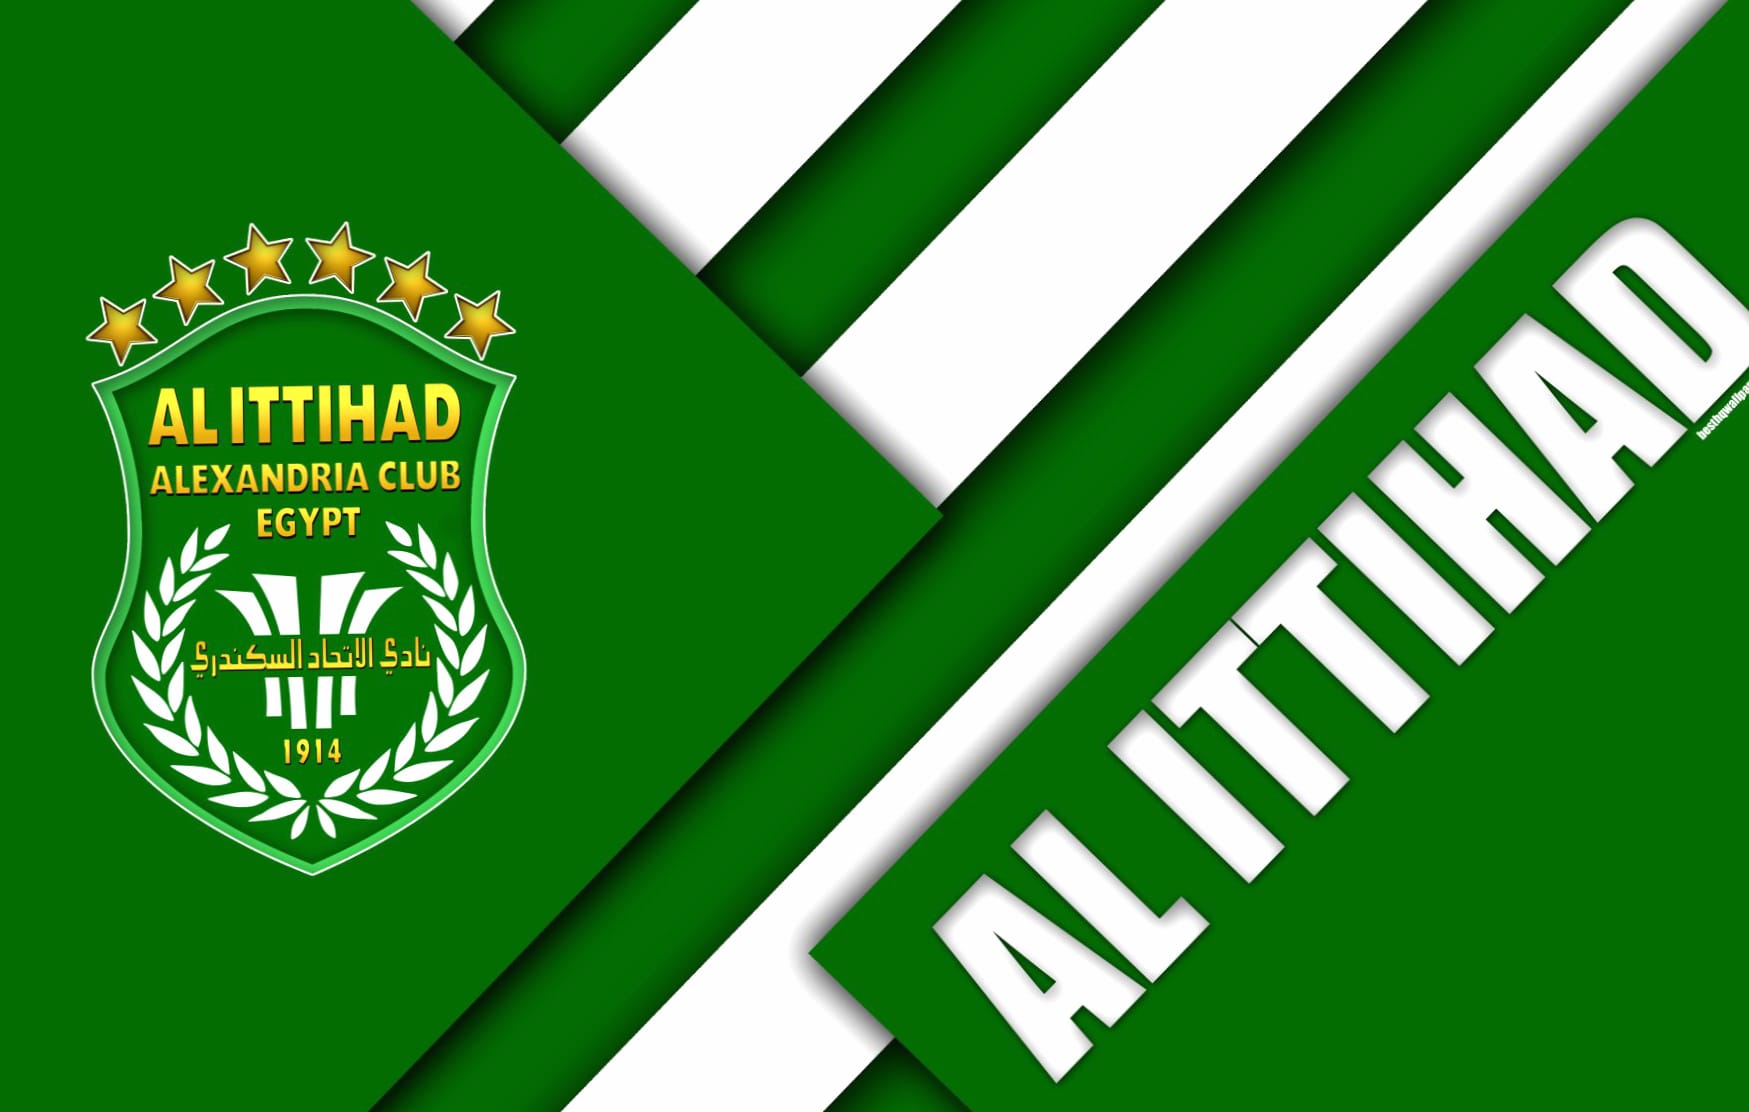 Al Ittihad Alexandria Club at 640 x 960 iPhone 4 size wallpapers HD quality